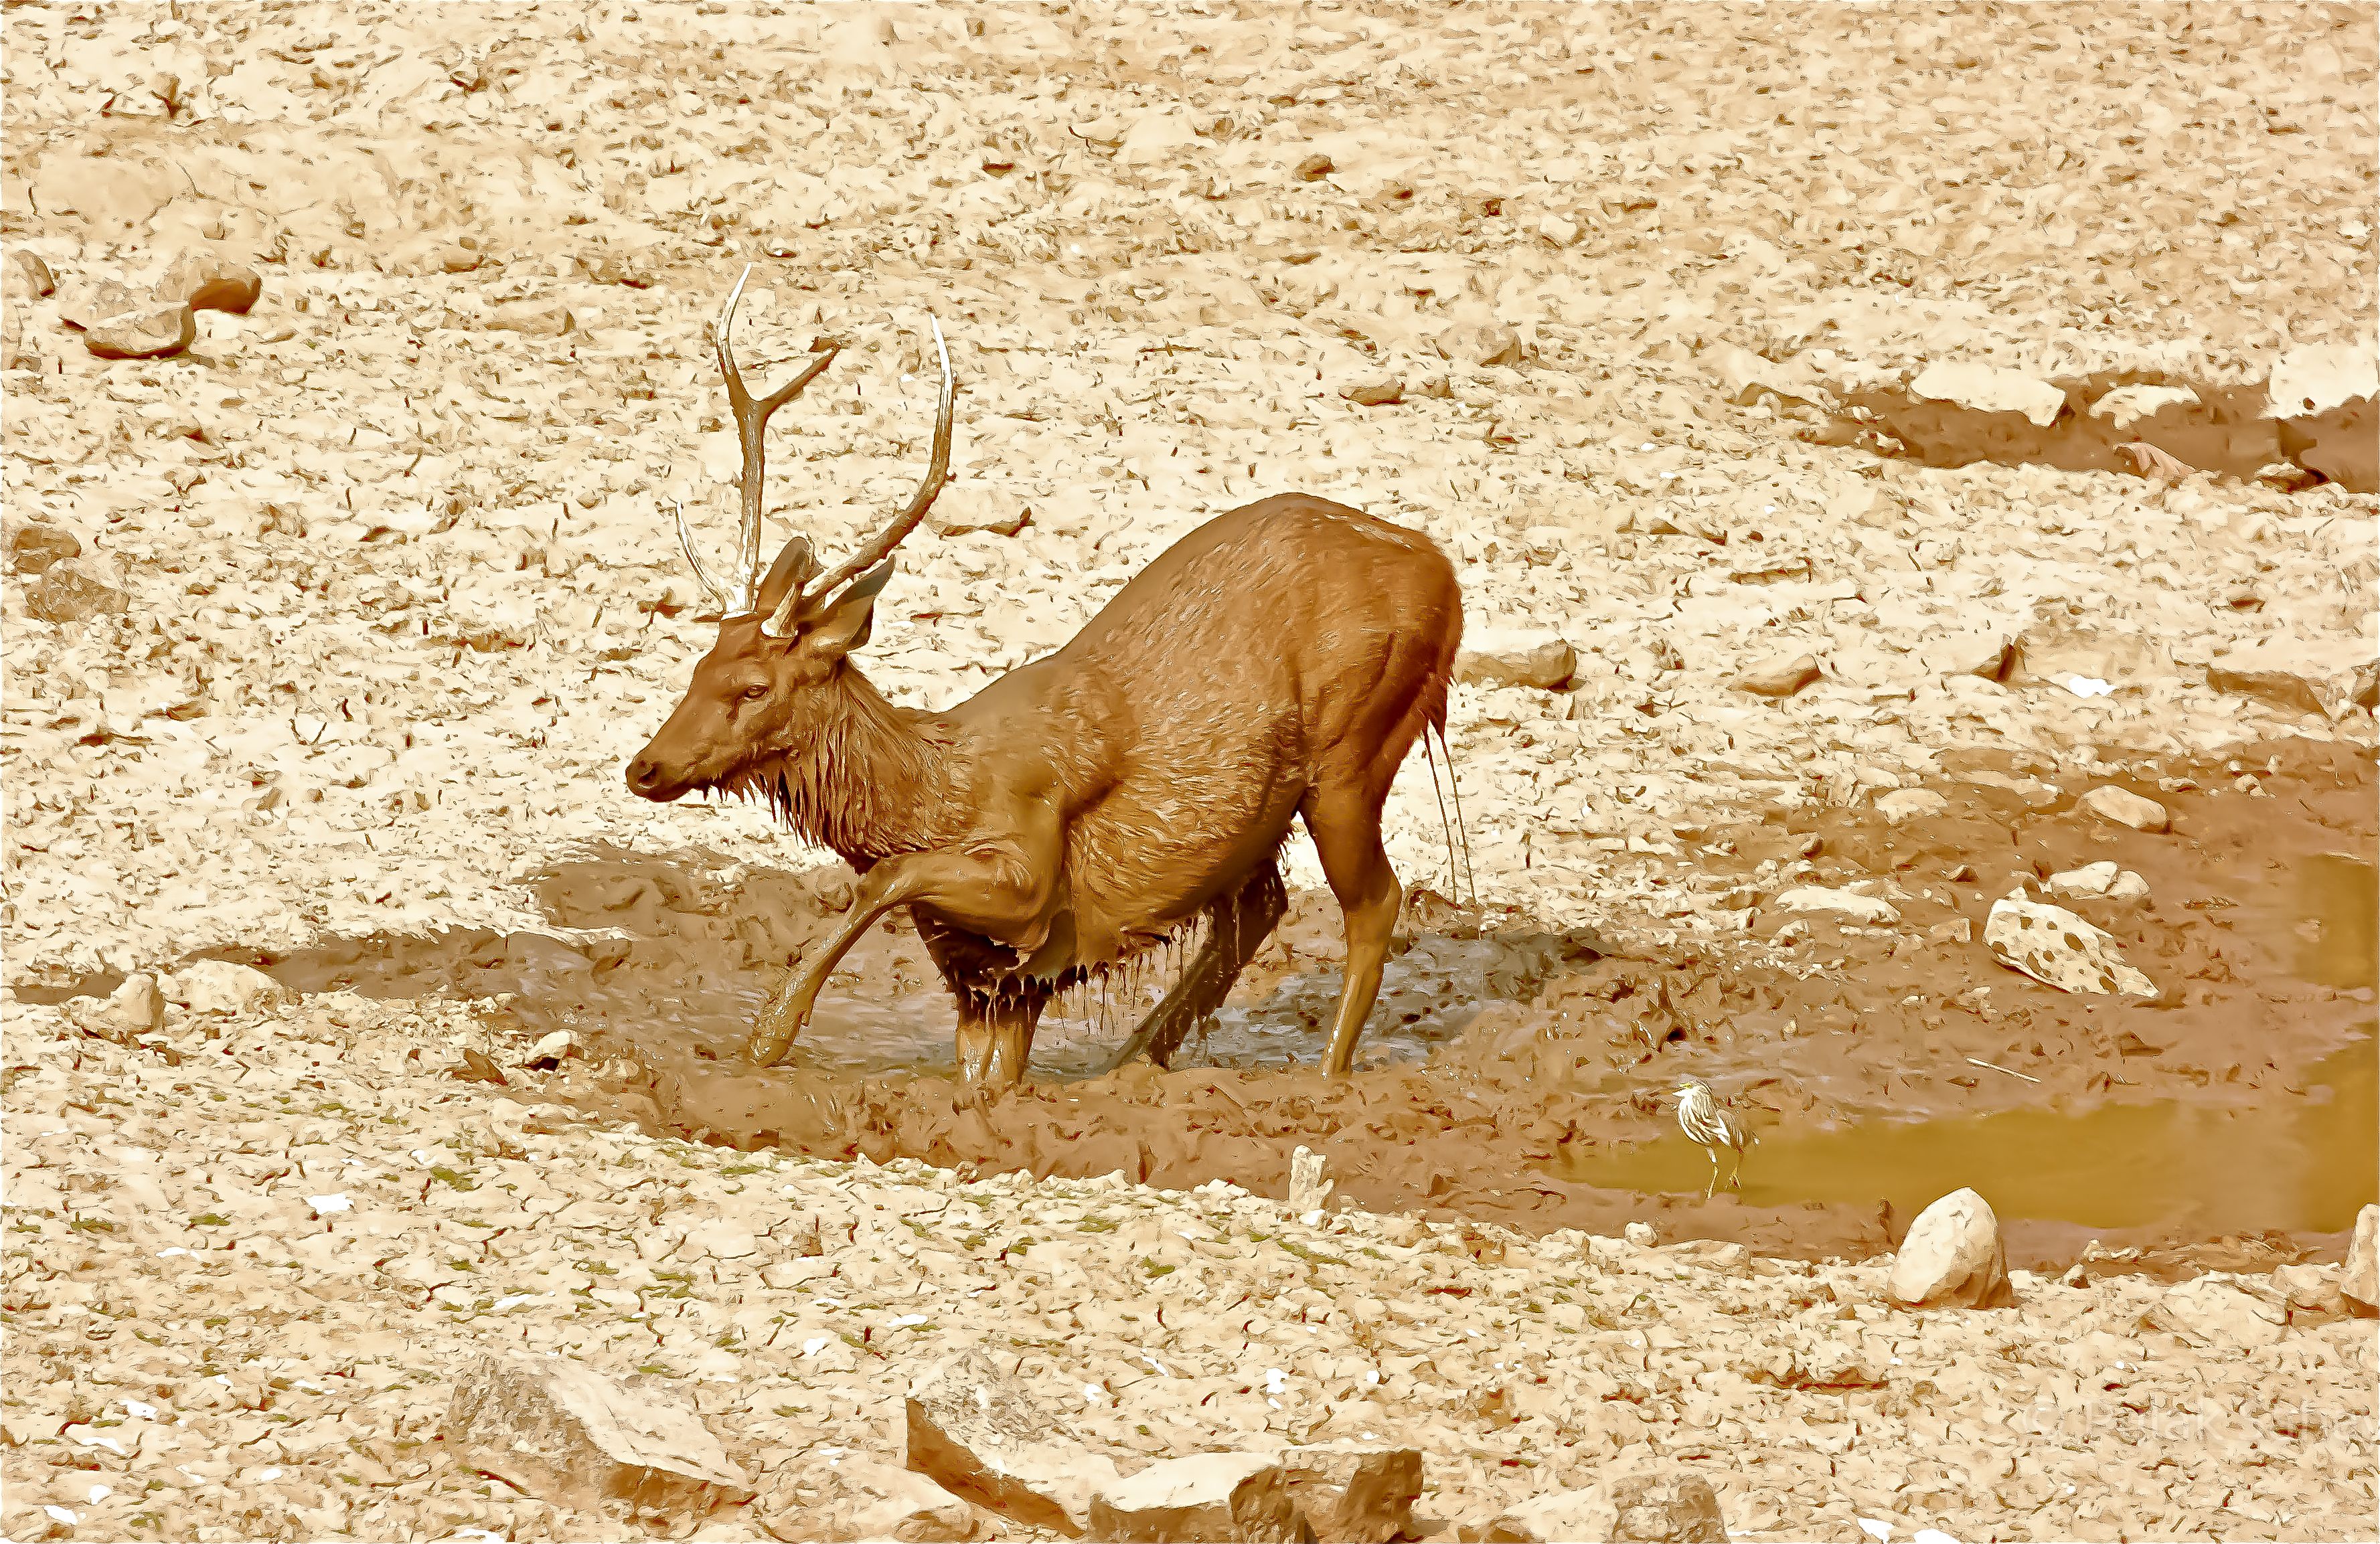 Deer getting out of a mud bath